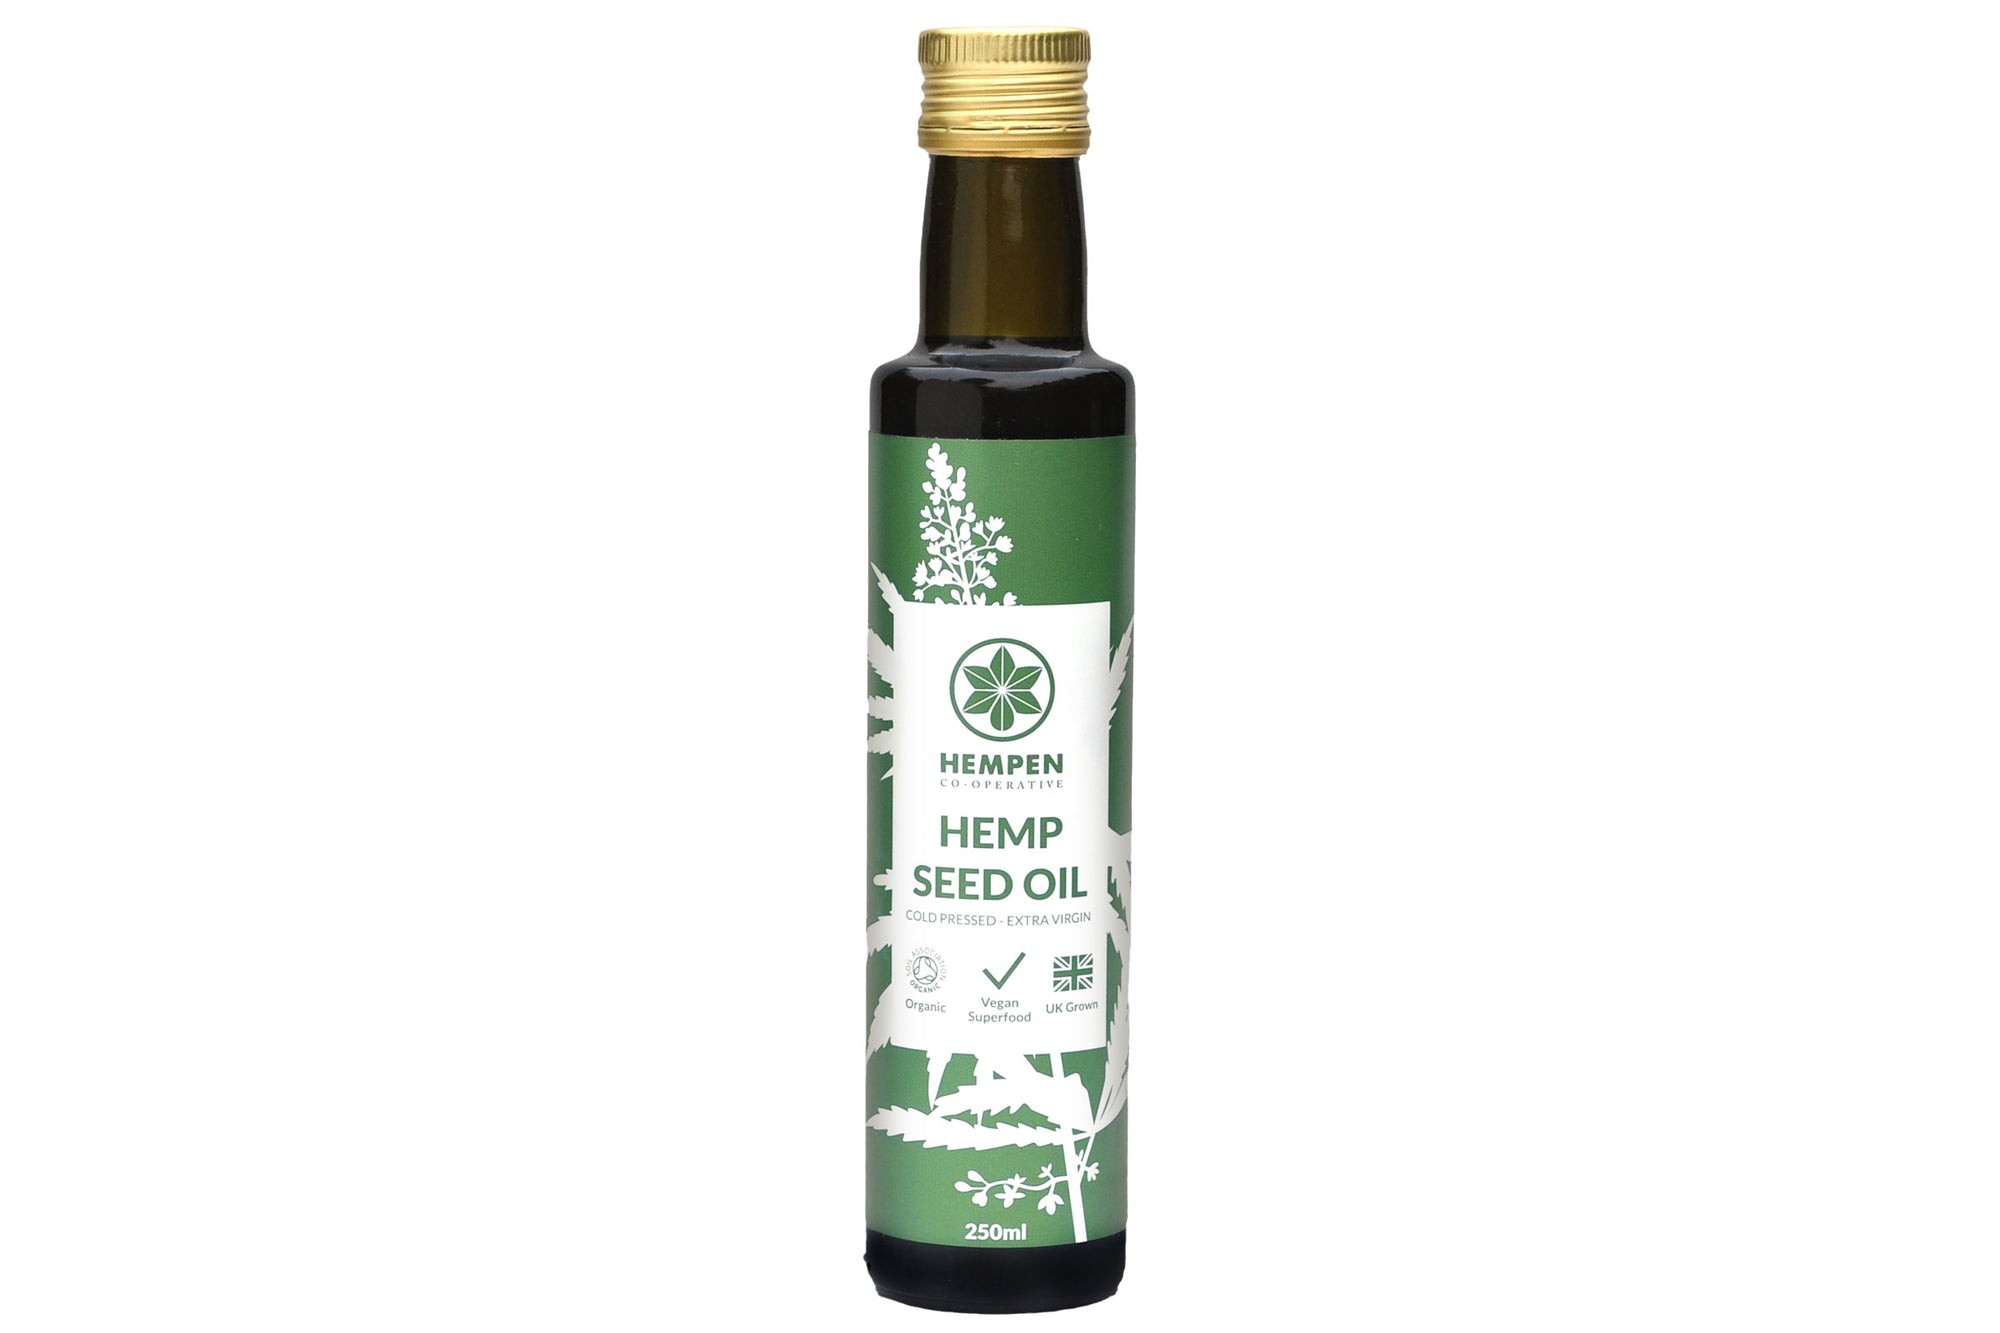 Hempen Co-operative Hemp Seed Oil, Organic, Extra Virgin